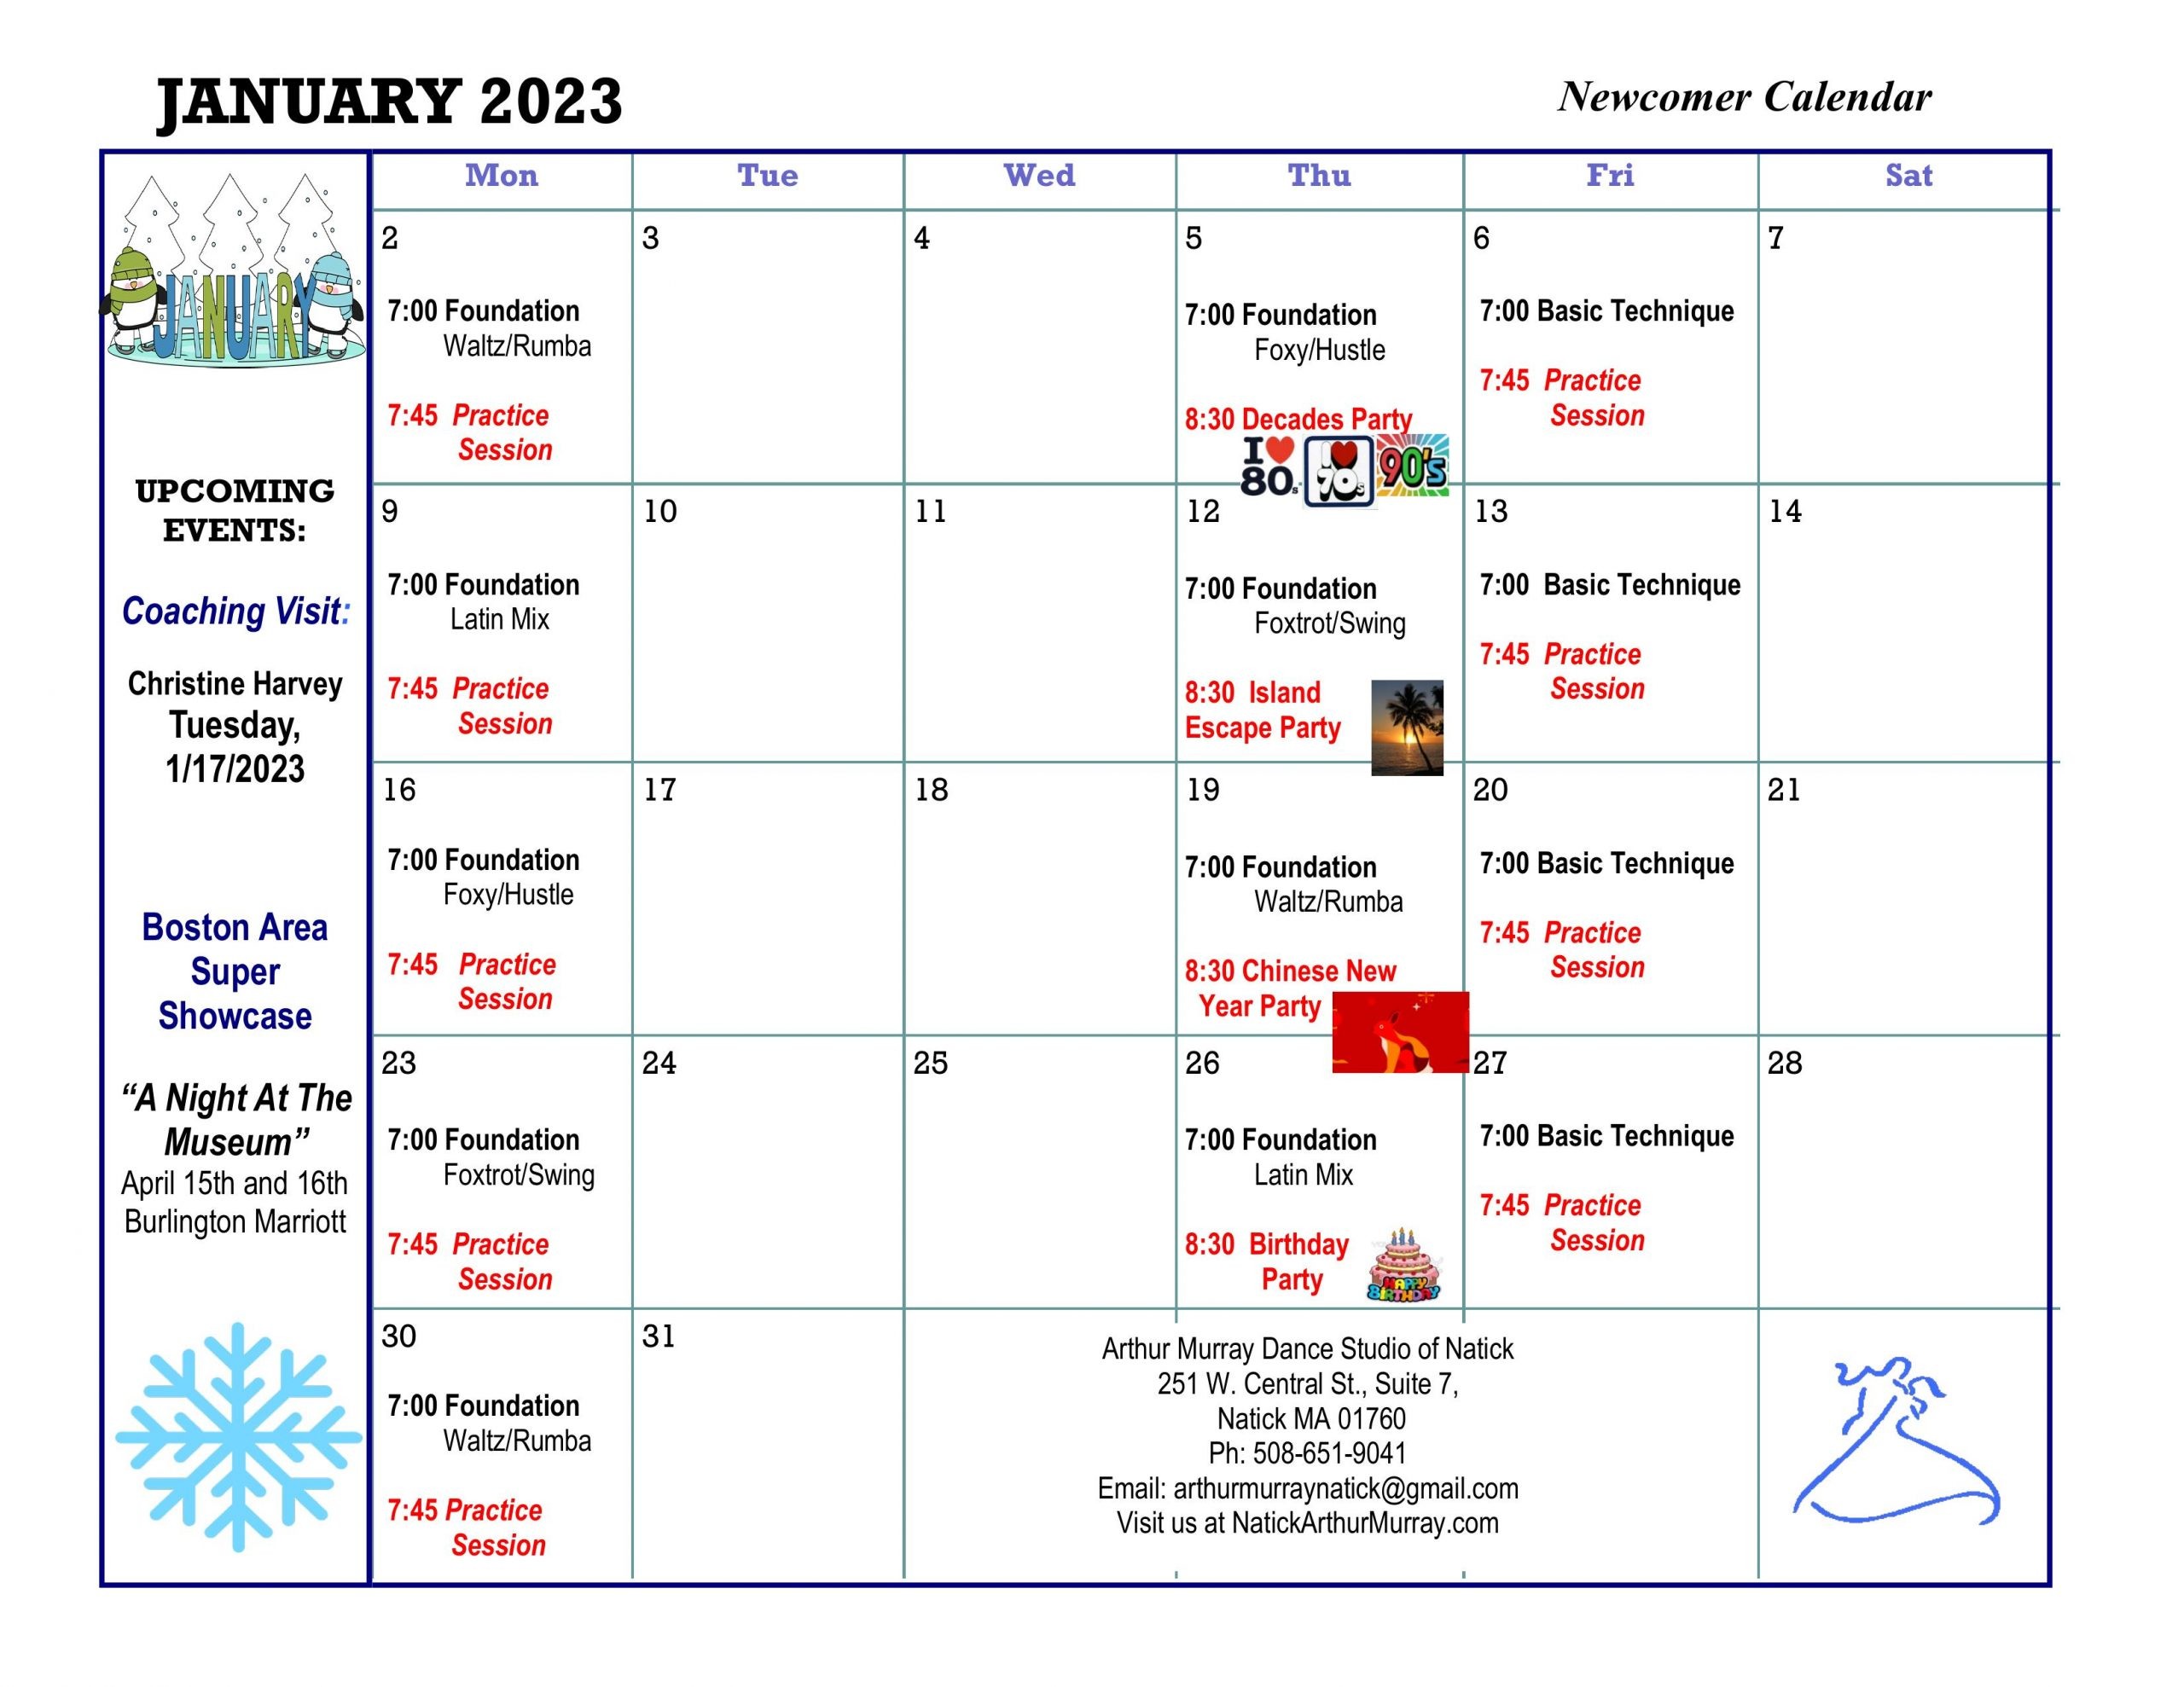 Dance Studio Natick Newcomer Jan Calendar